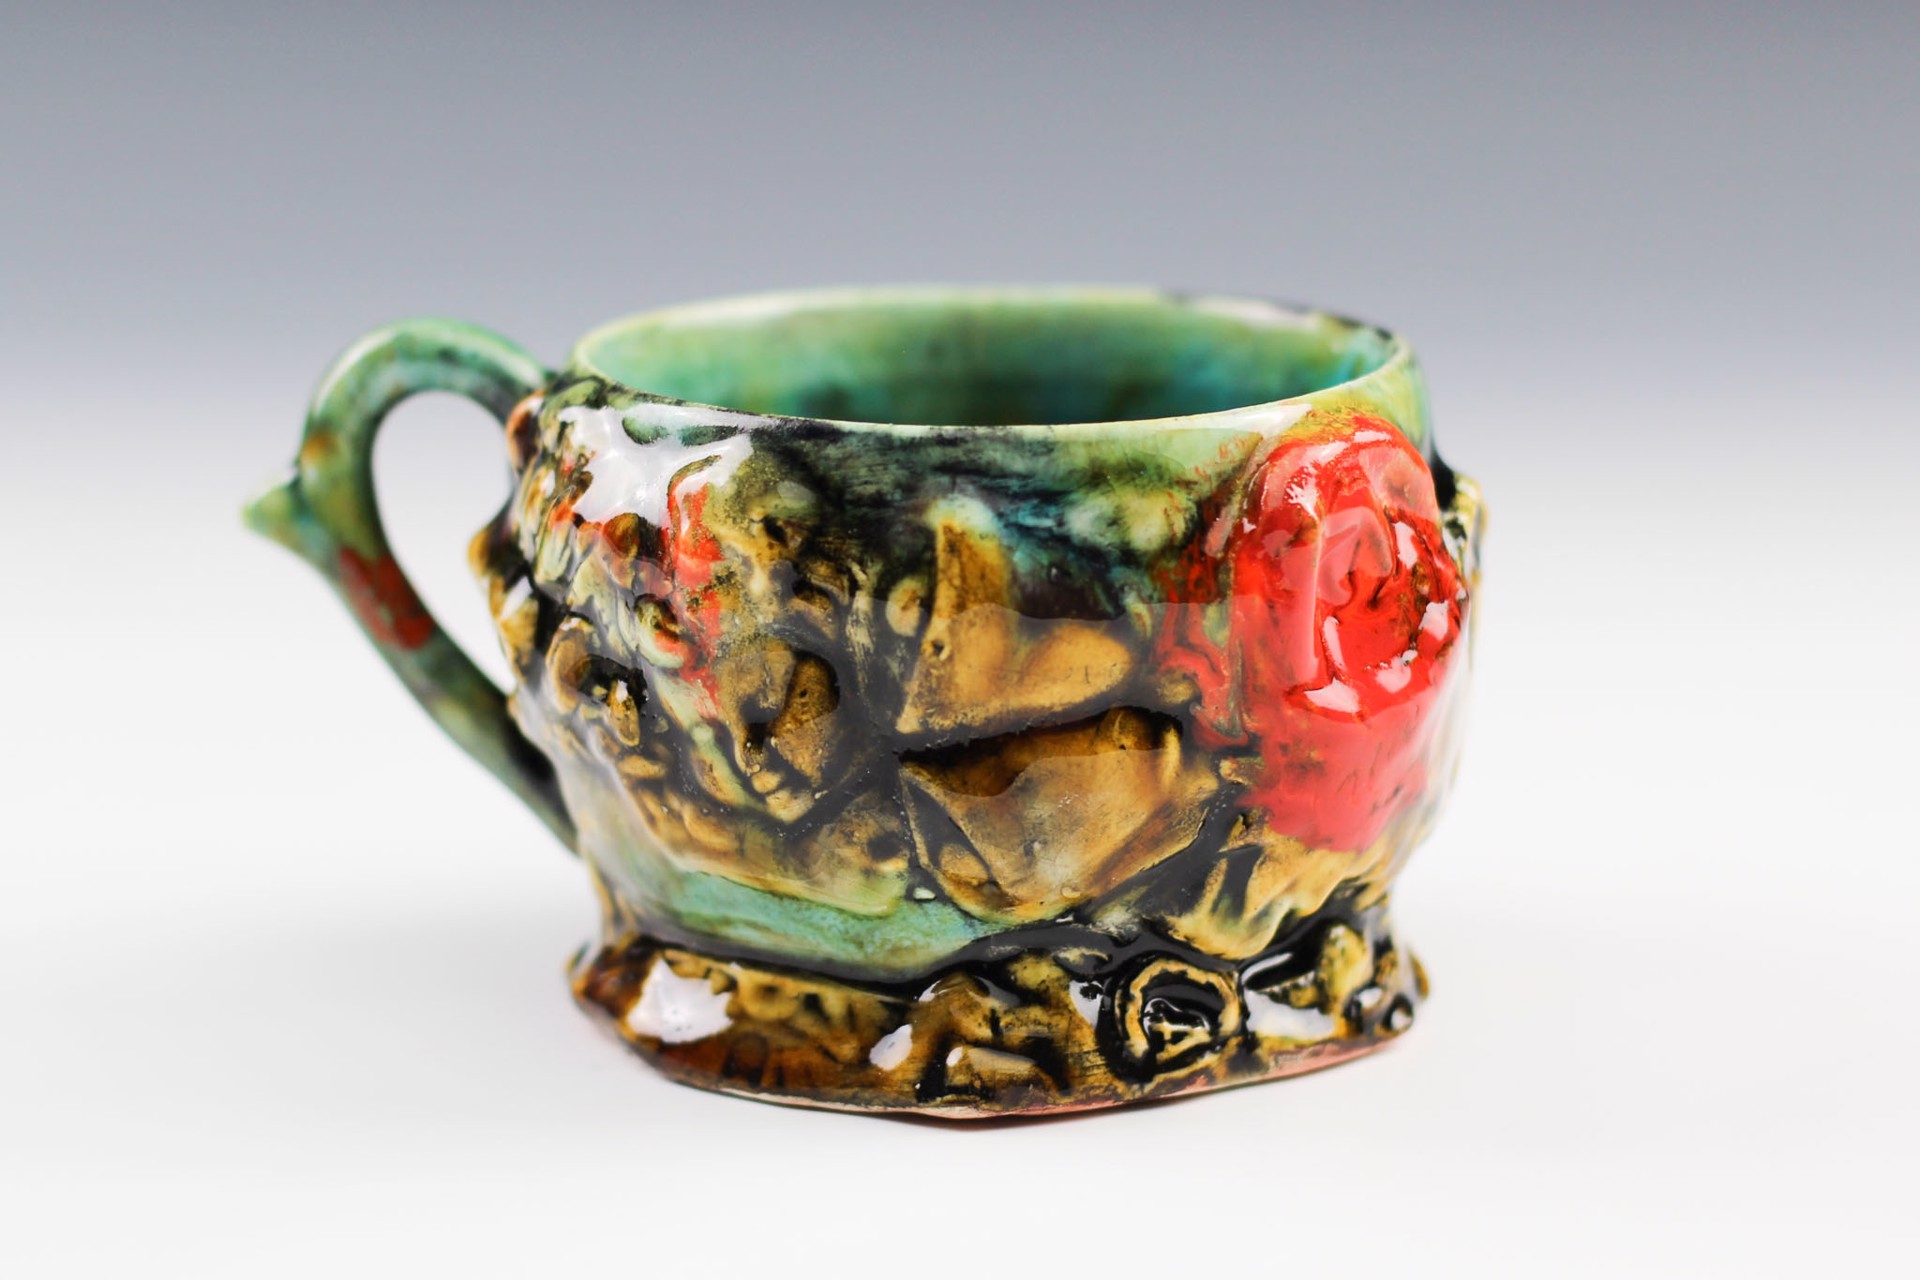 Teacup by Craig Clifford